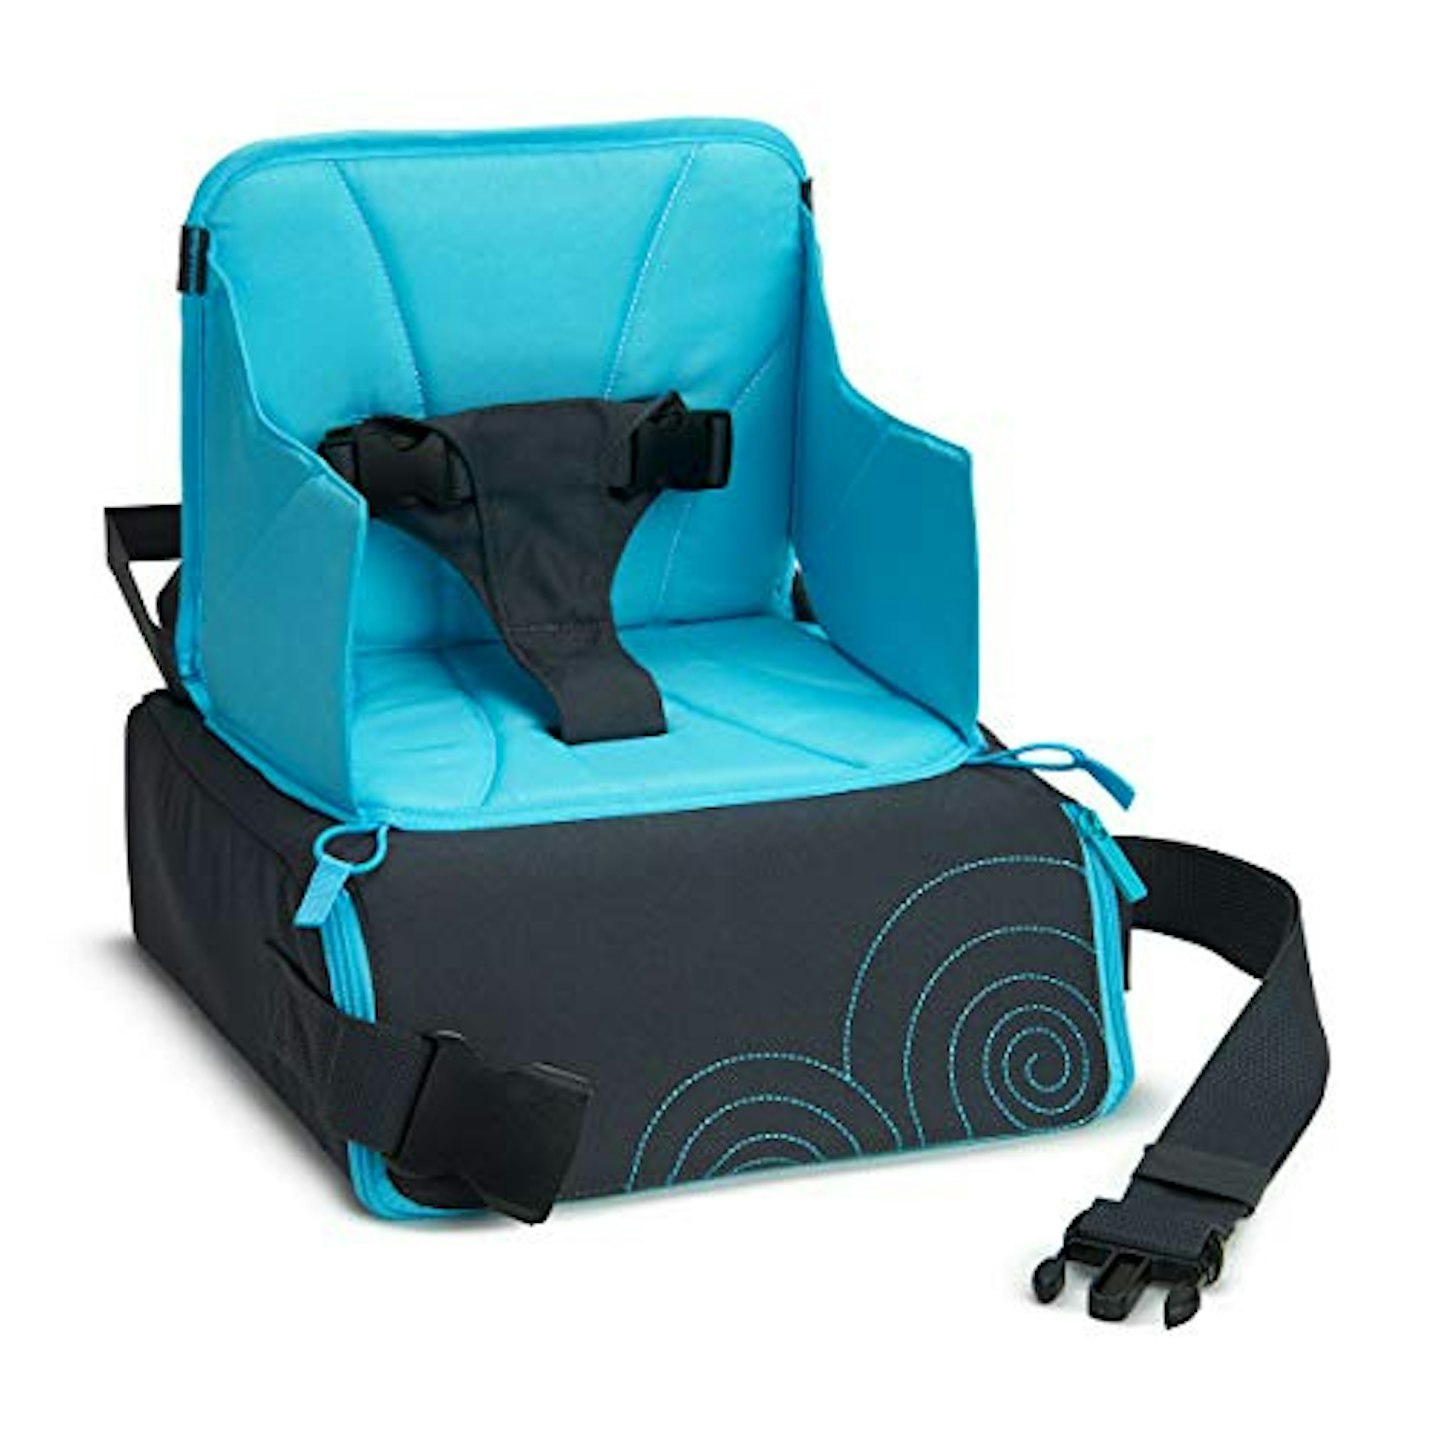 Munchkin Portable Travel Booster Seat